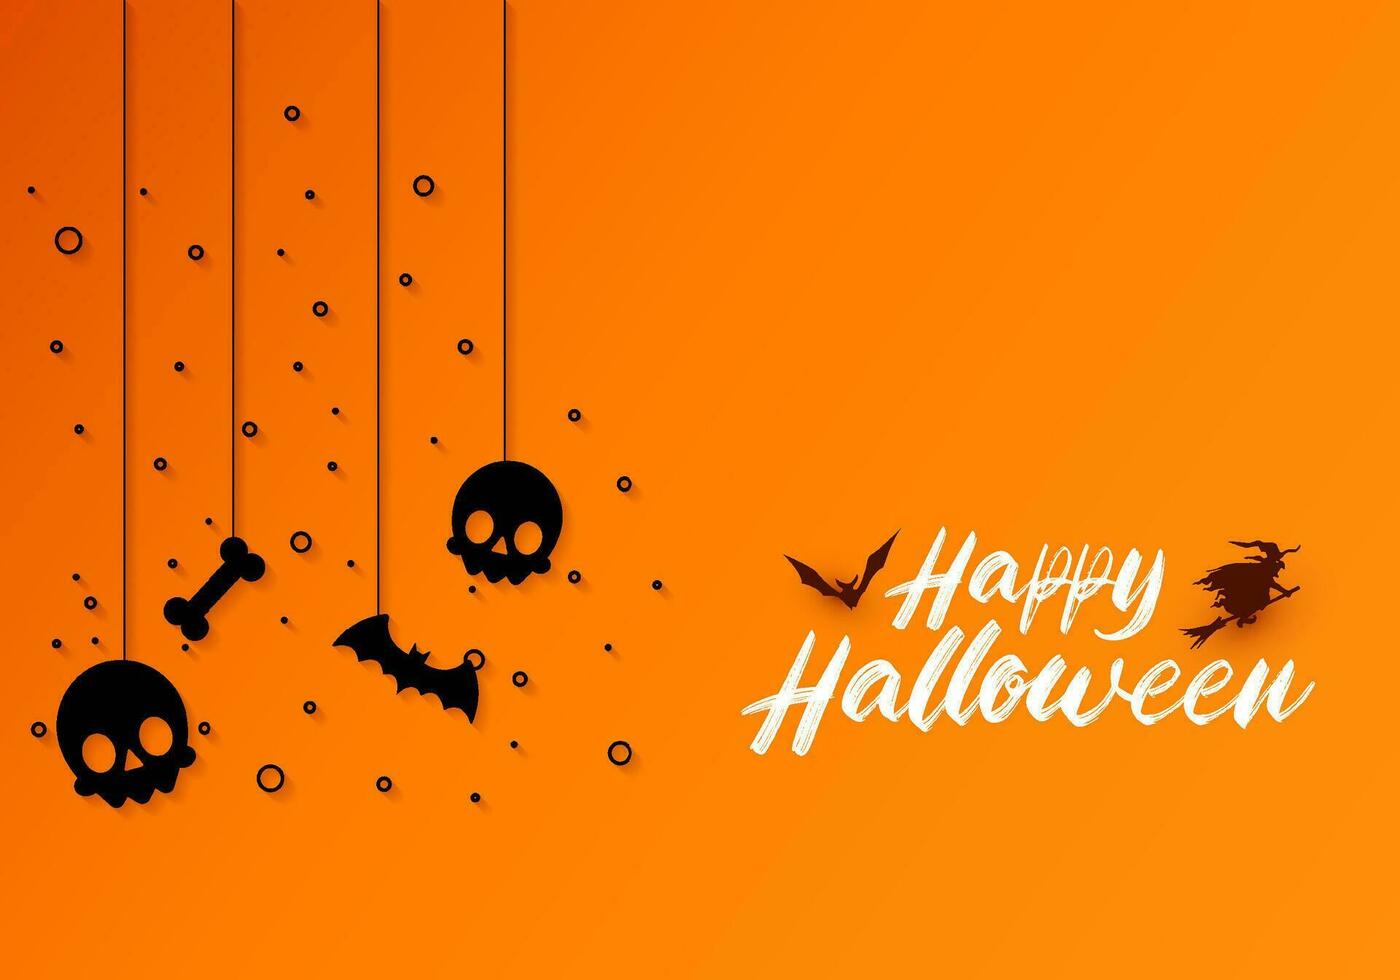 Happy halloween background with hanging halloween elements like pumpkins and skulls vector